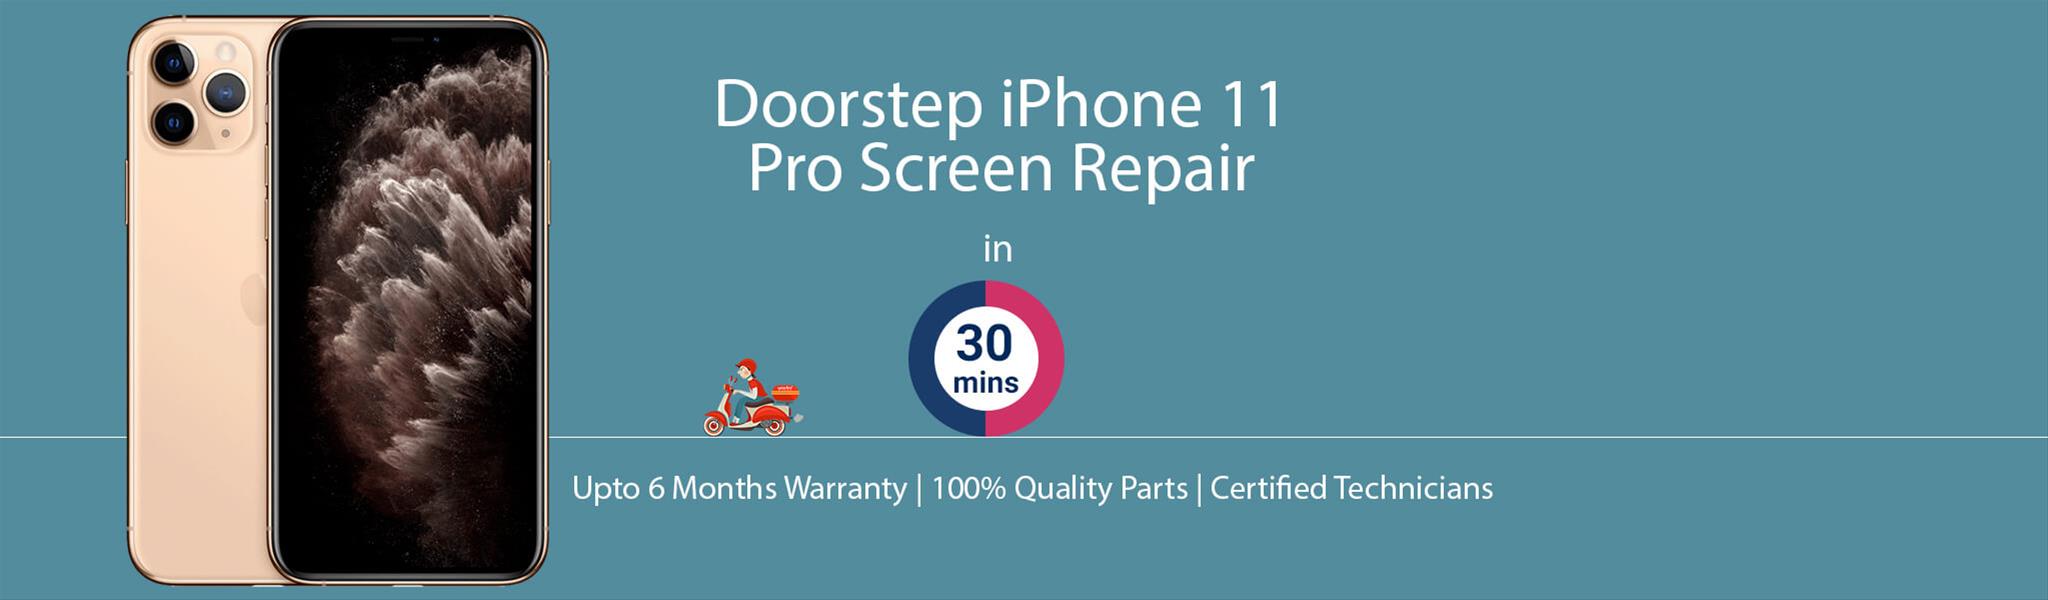 iphone-11-pro-screen-repair.jpg